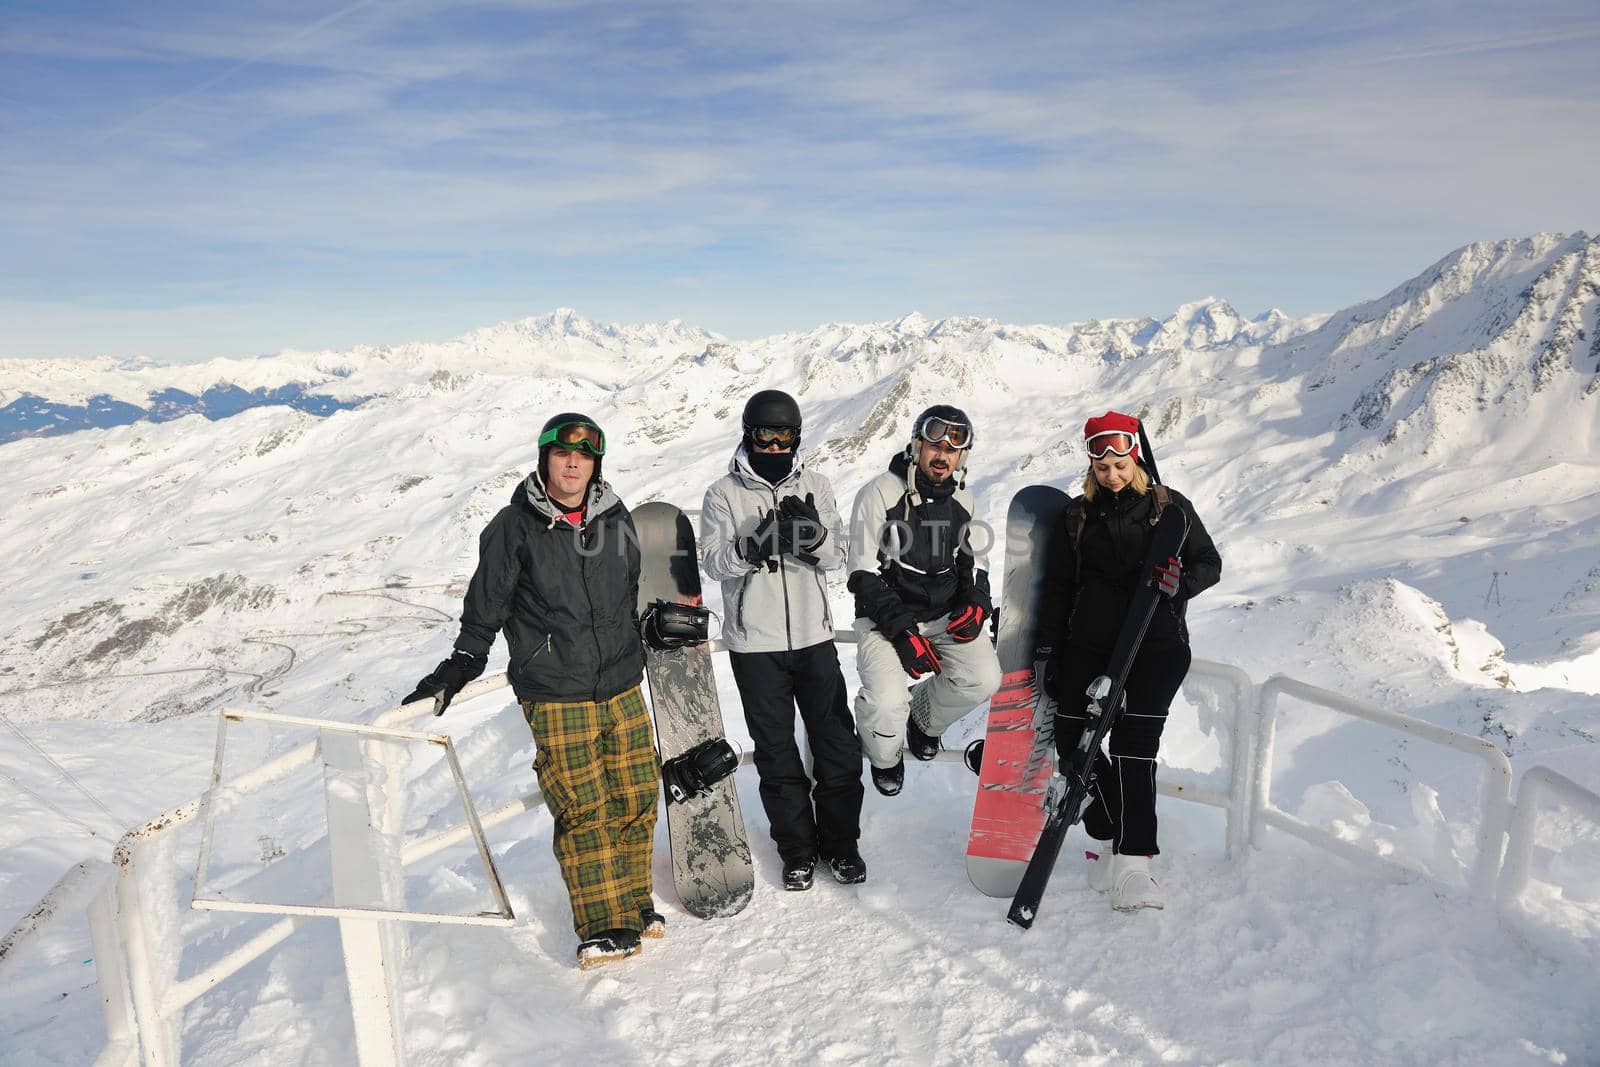  people group on snow at winter season by dotshock